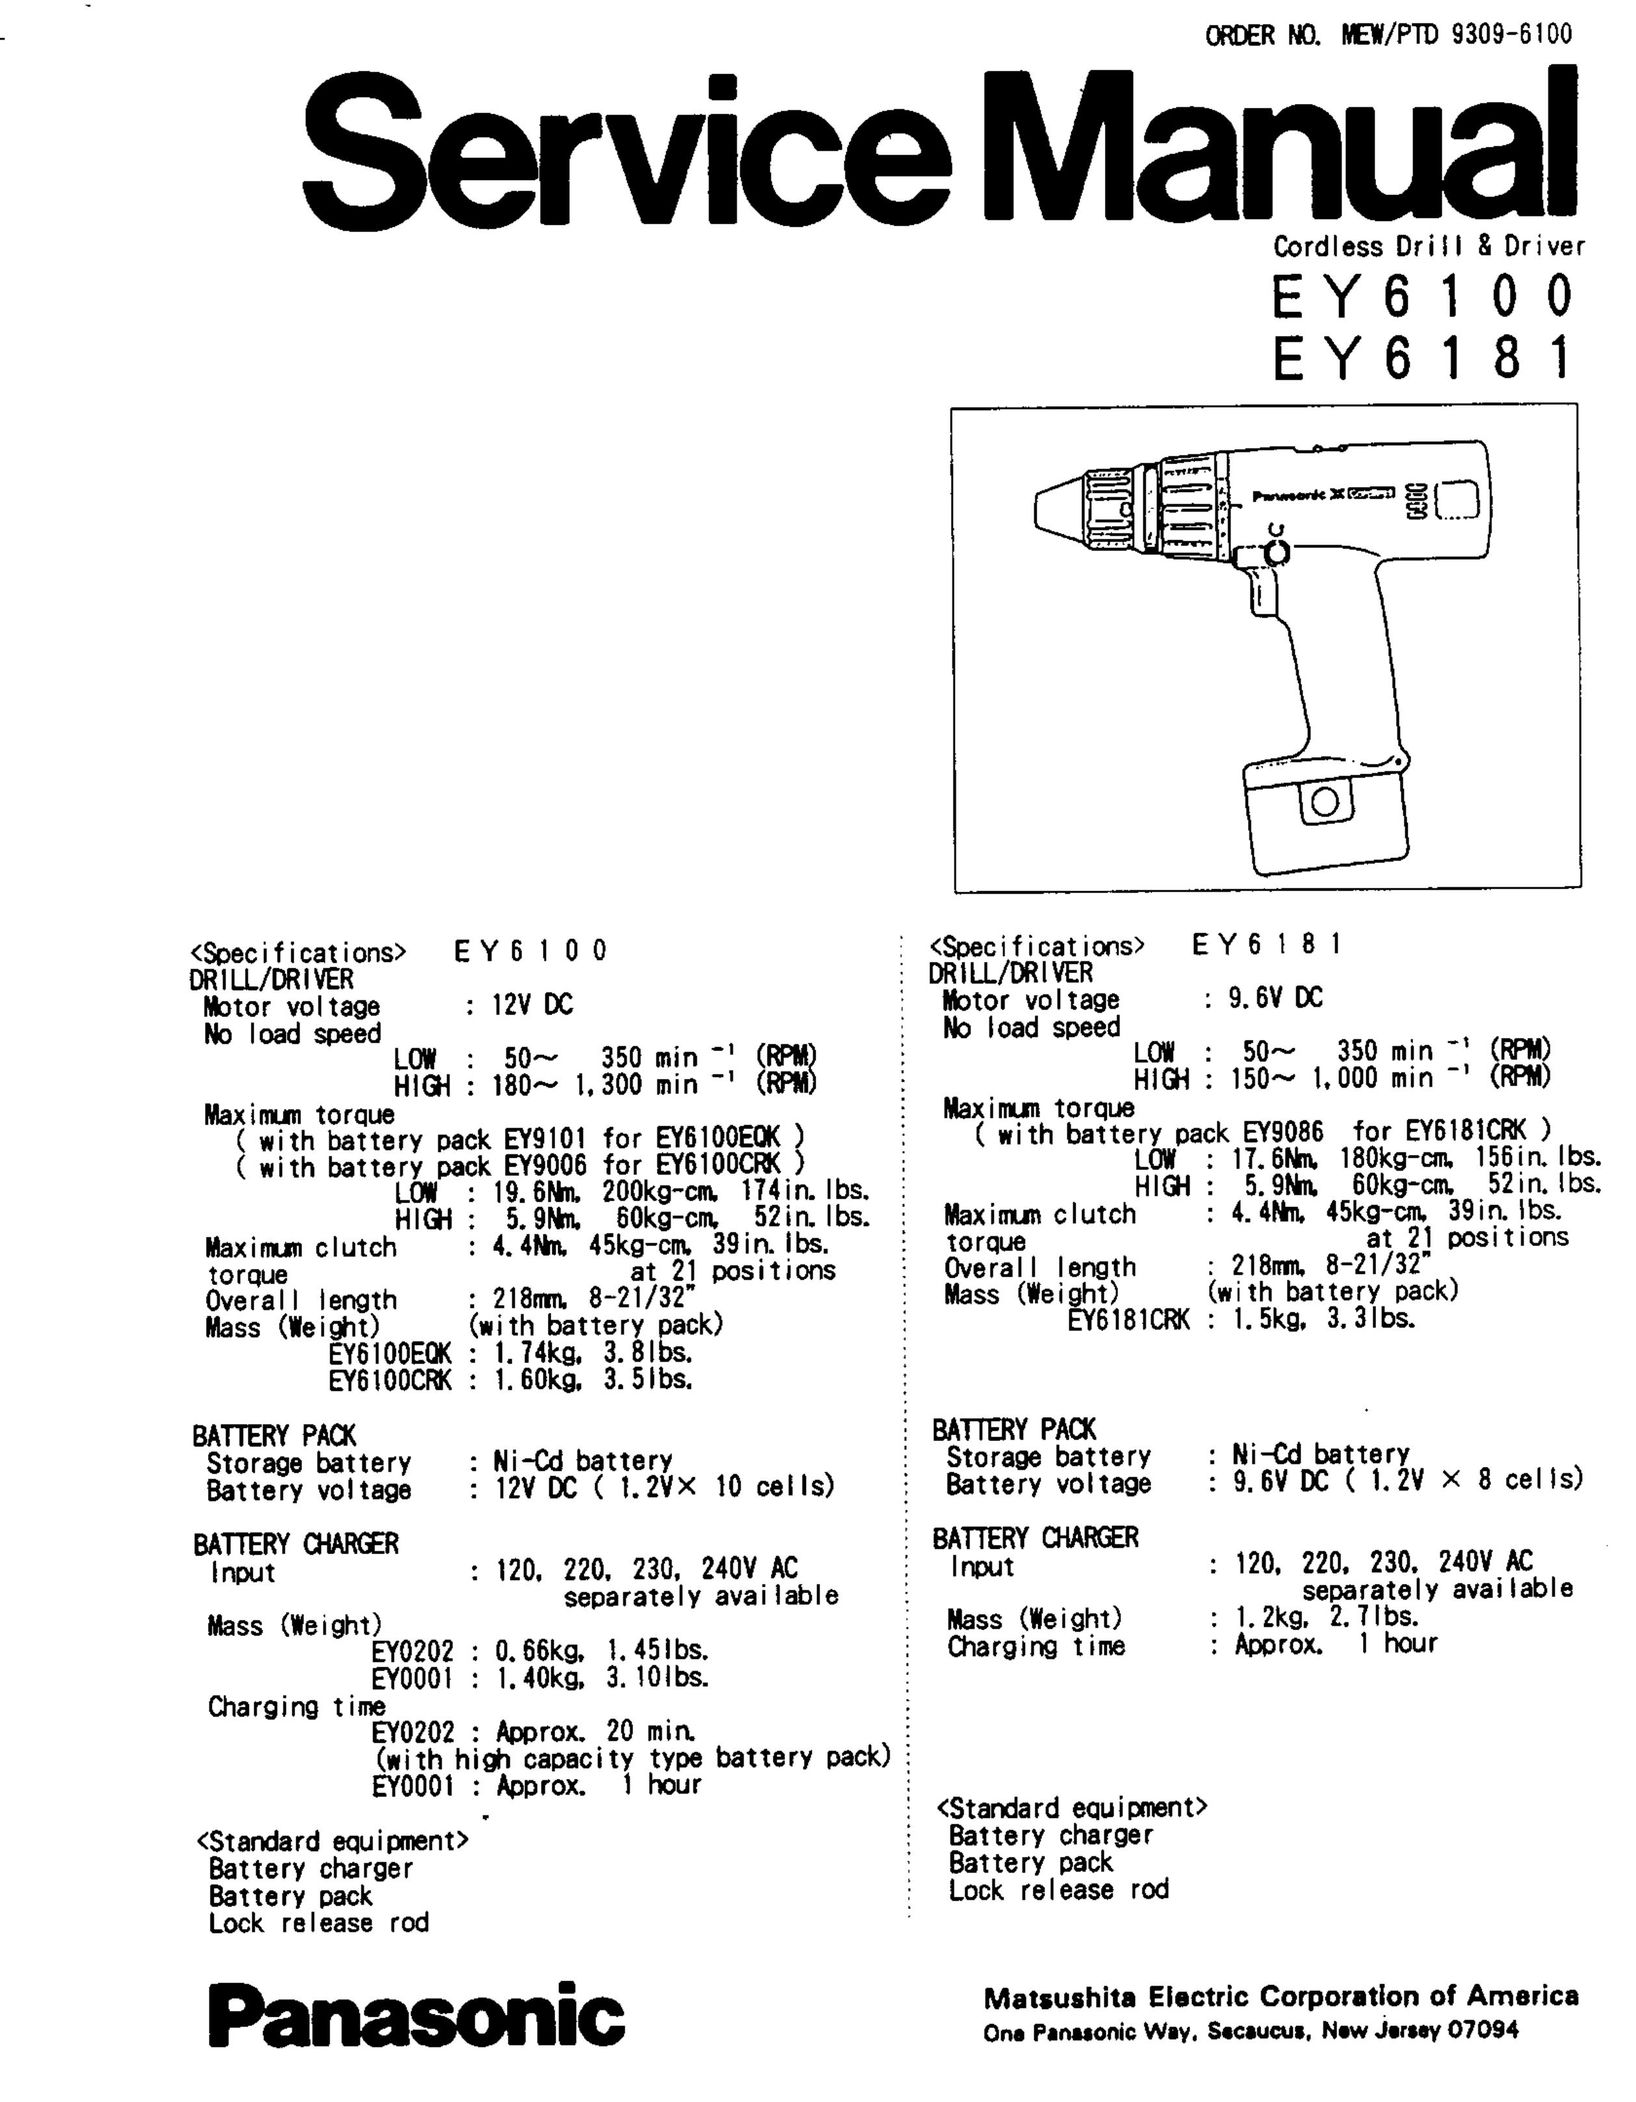 Panasonic EY6100 Cordless Drill User Manual